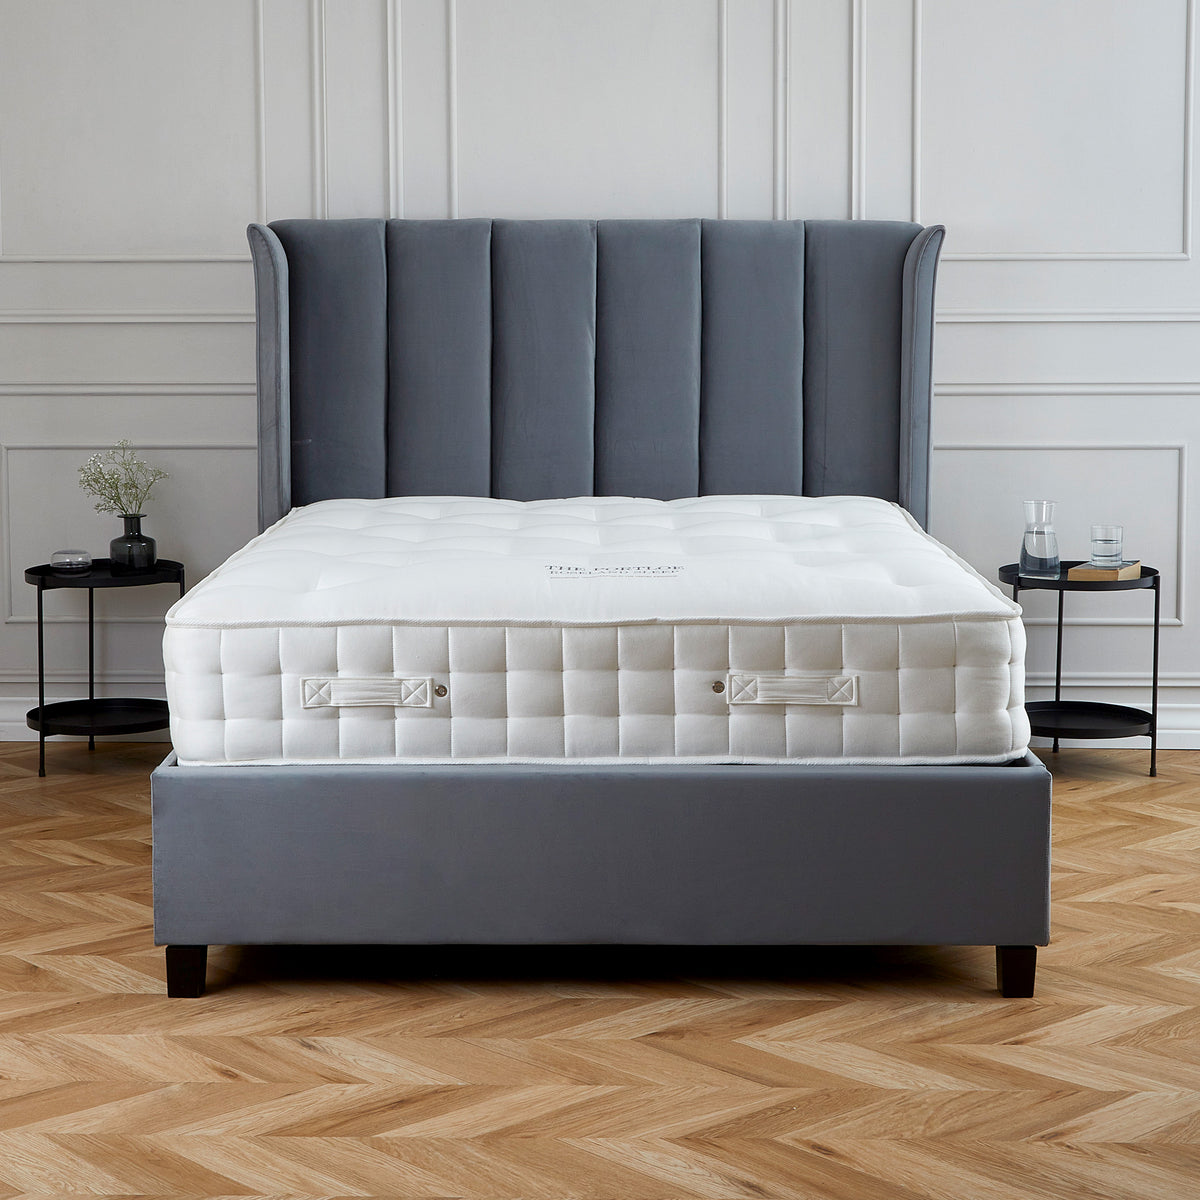 Mia Grey Velvet 4ft6 Double Ottoman Bed Frame from Roseland Furniture